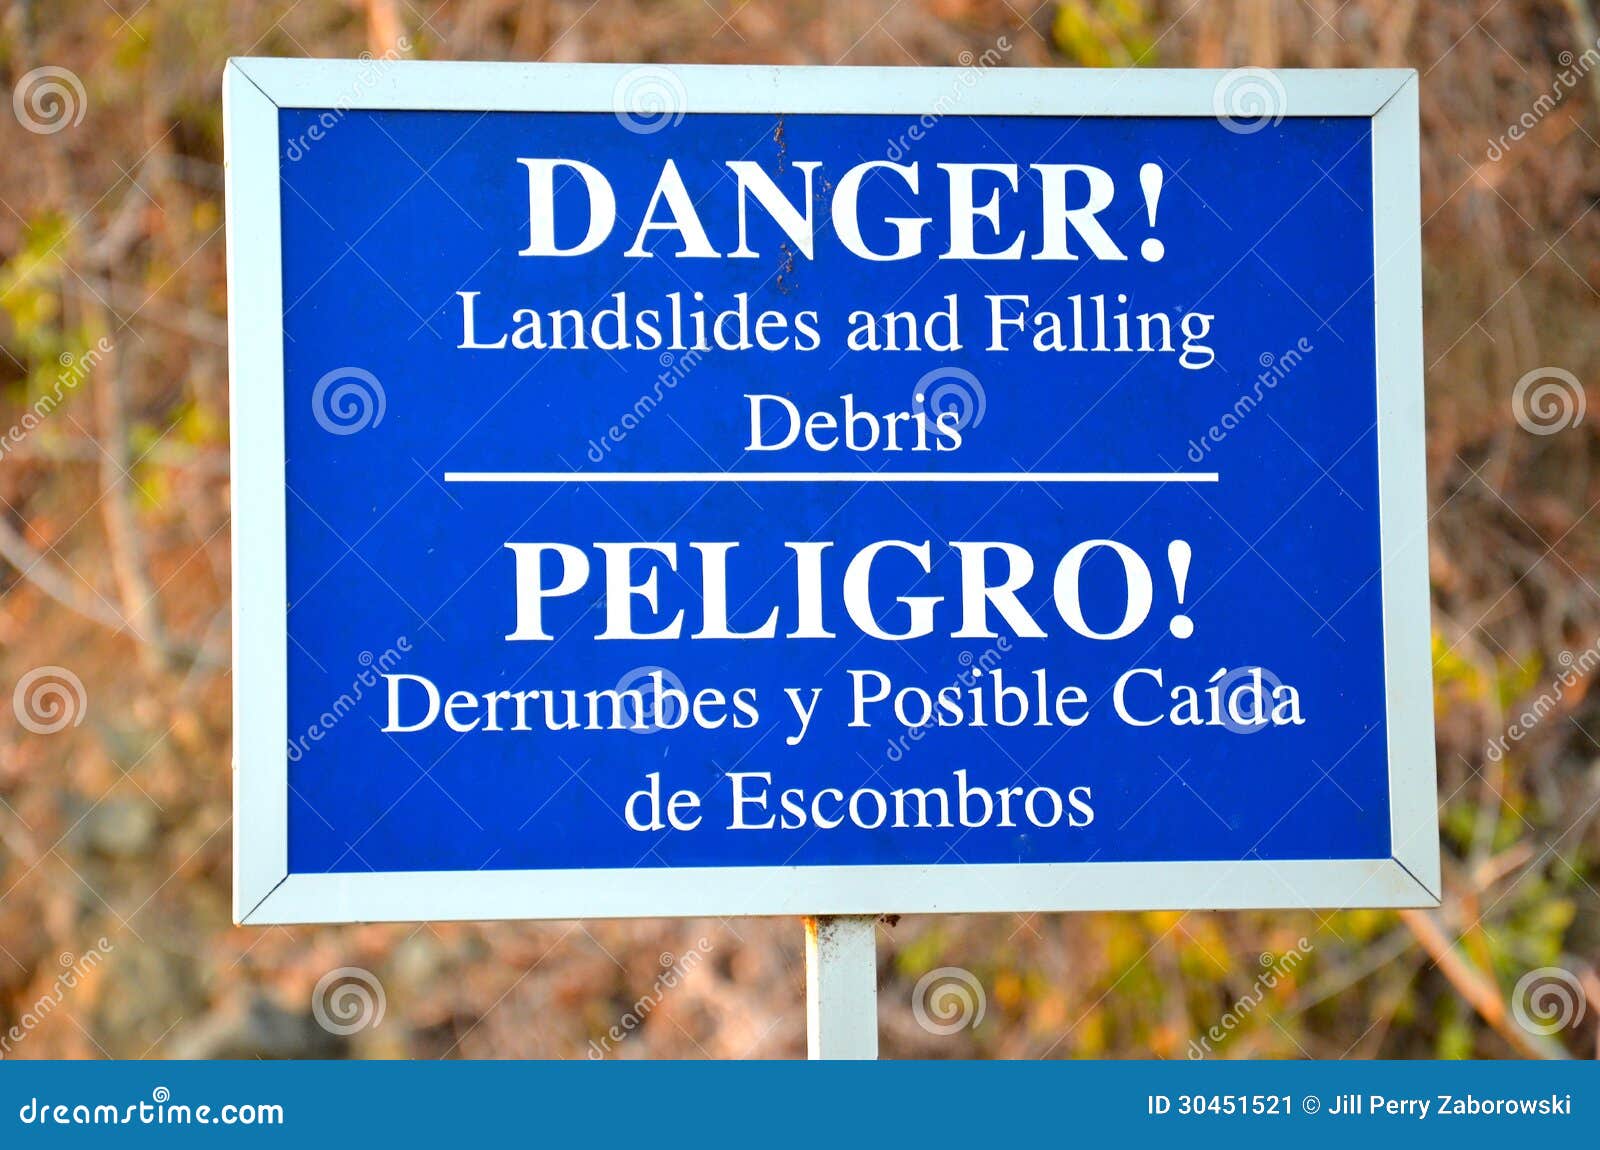 danger sign in costa rica